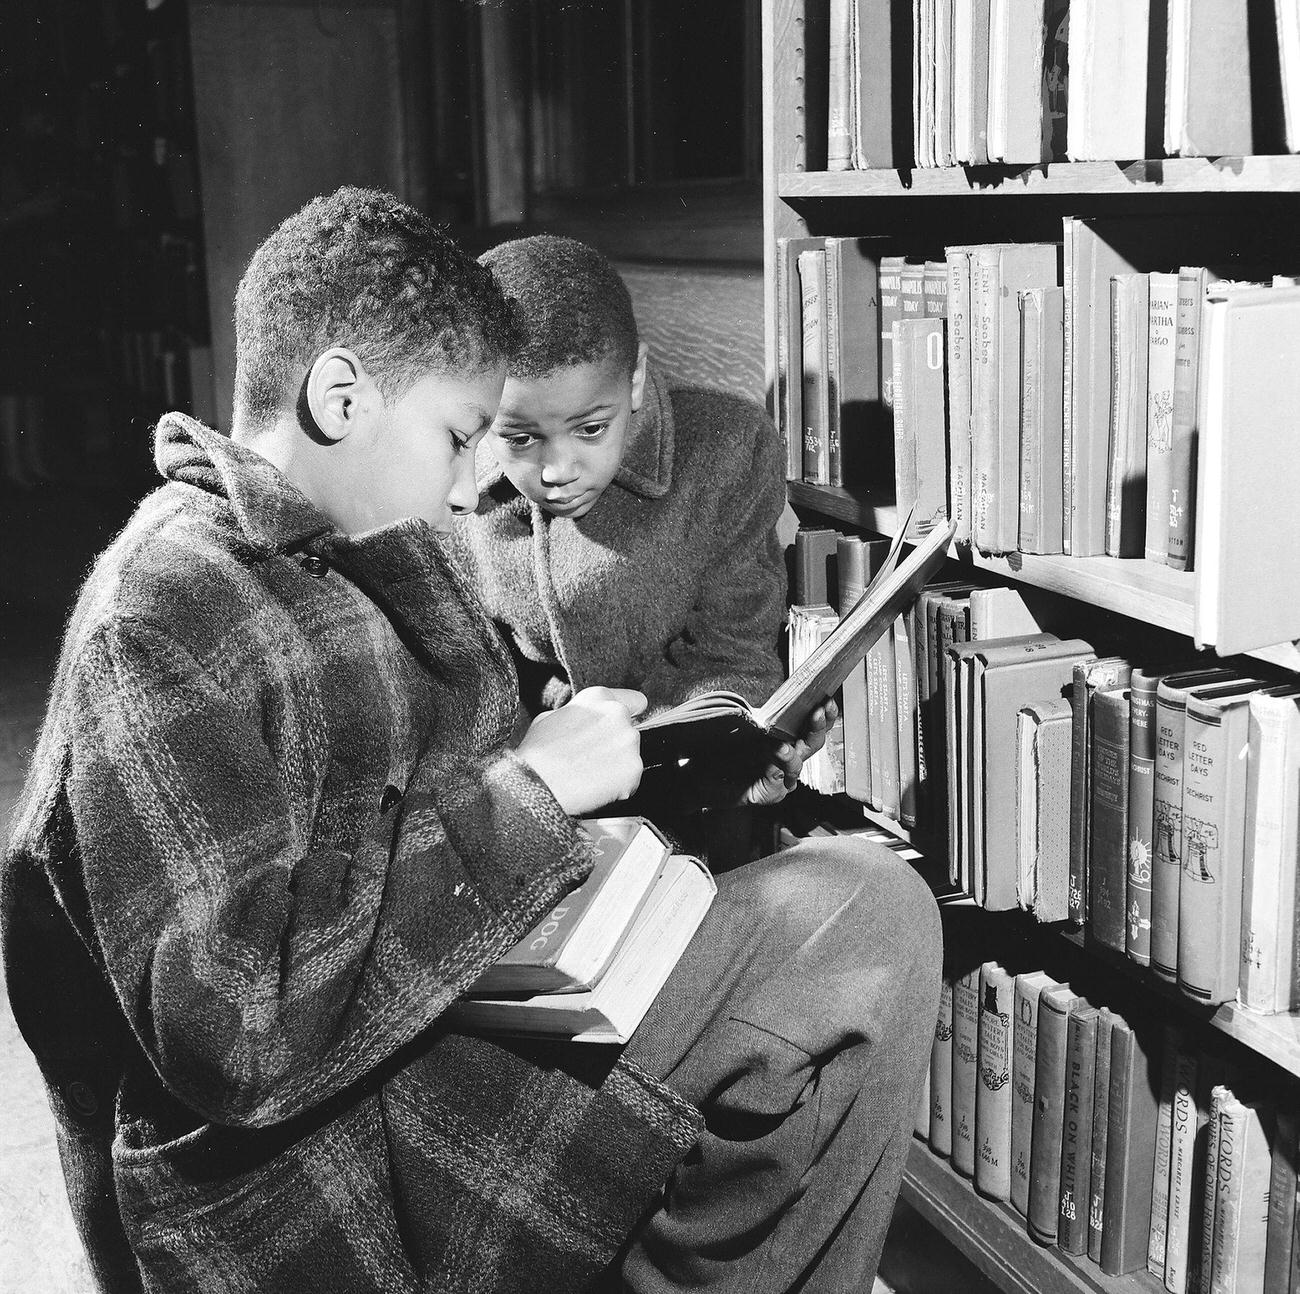 Kids Engrossed In Books, 1947